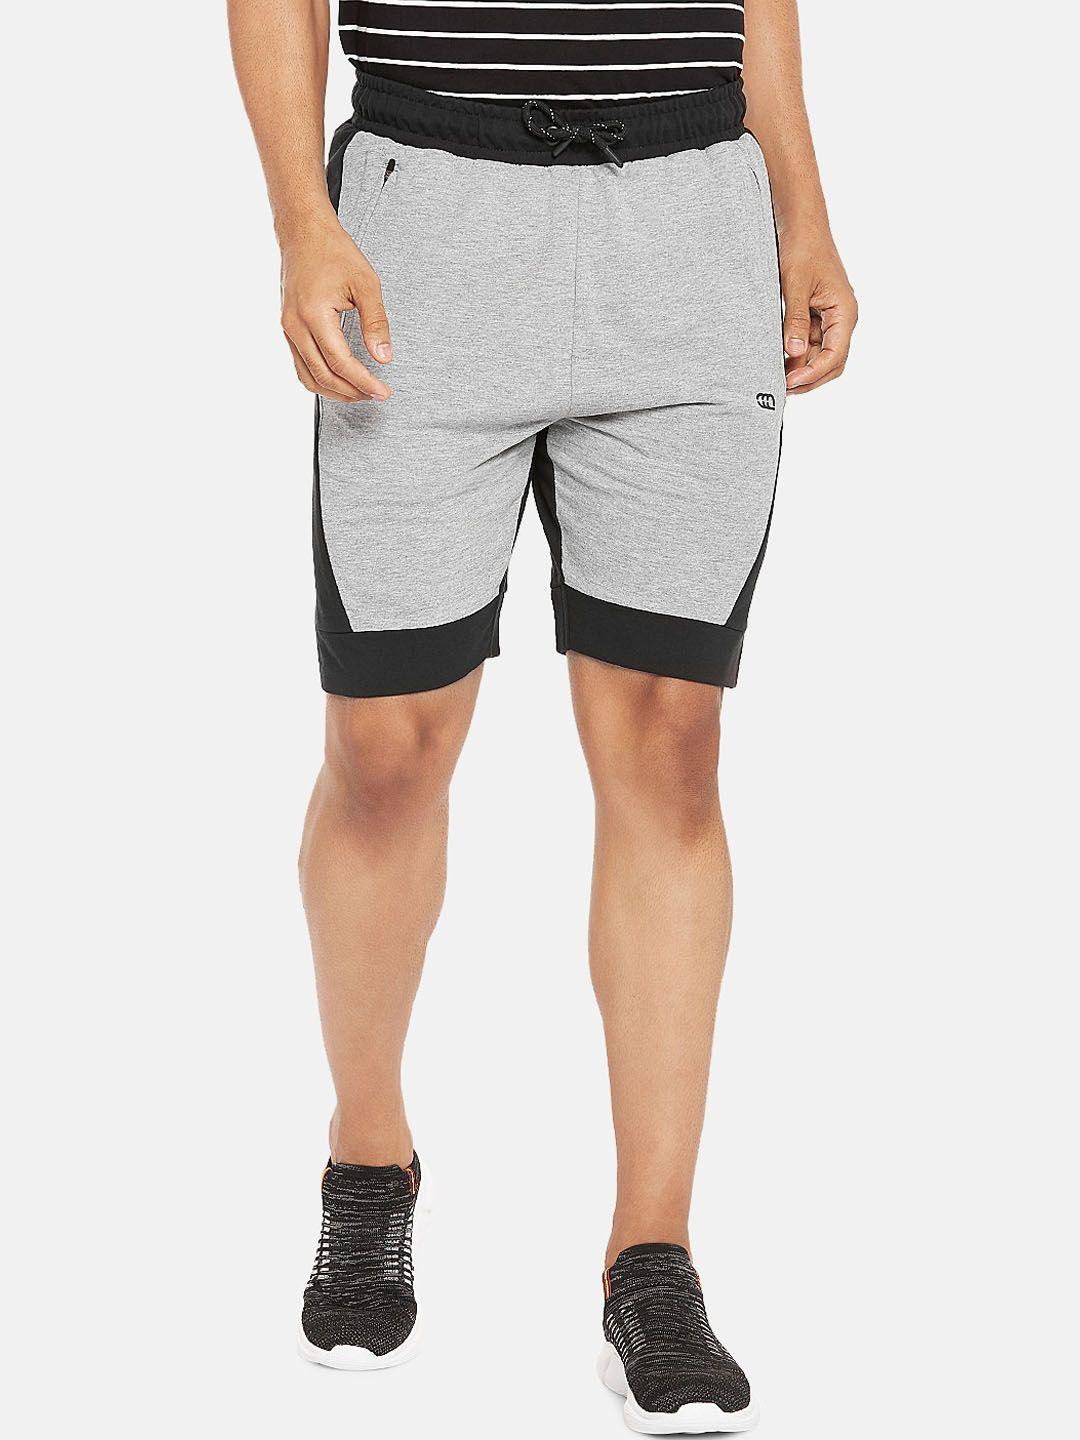 ajile by pantaloons men grey & black colourblocked slim fit sports shorts